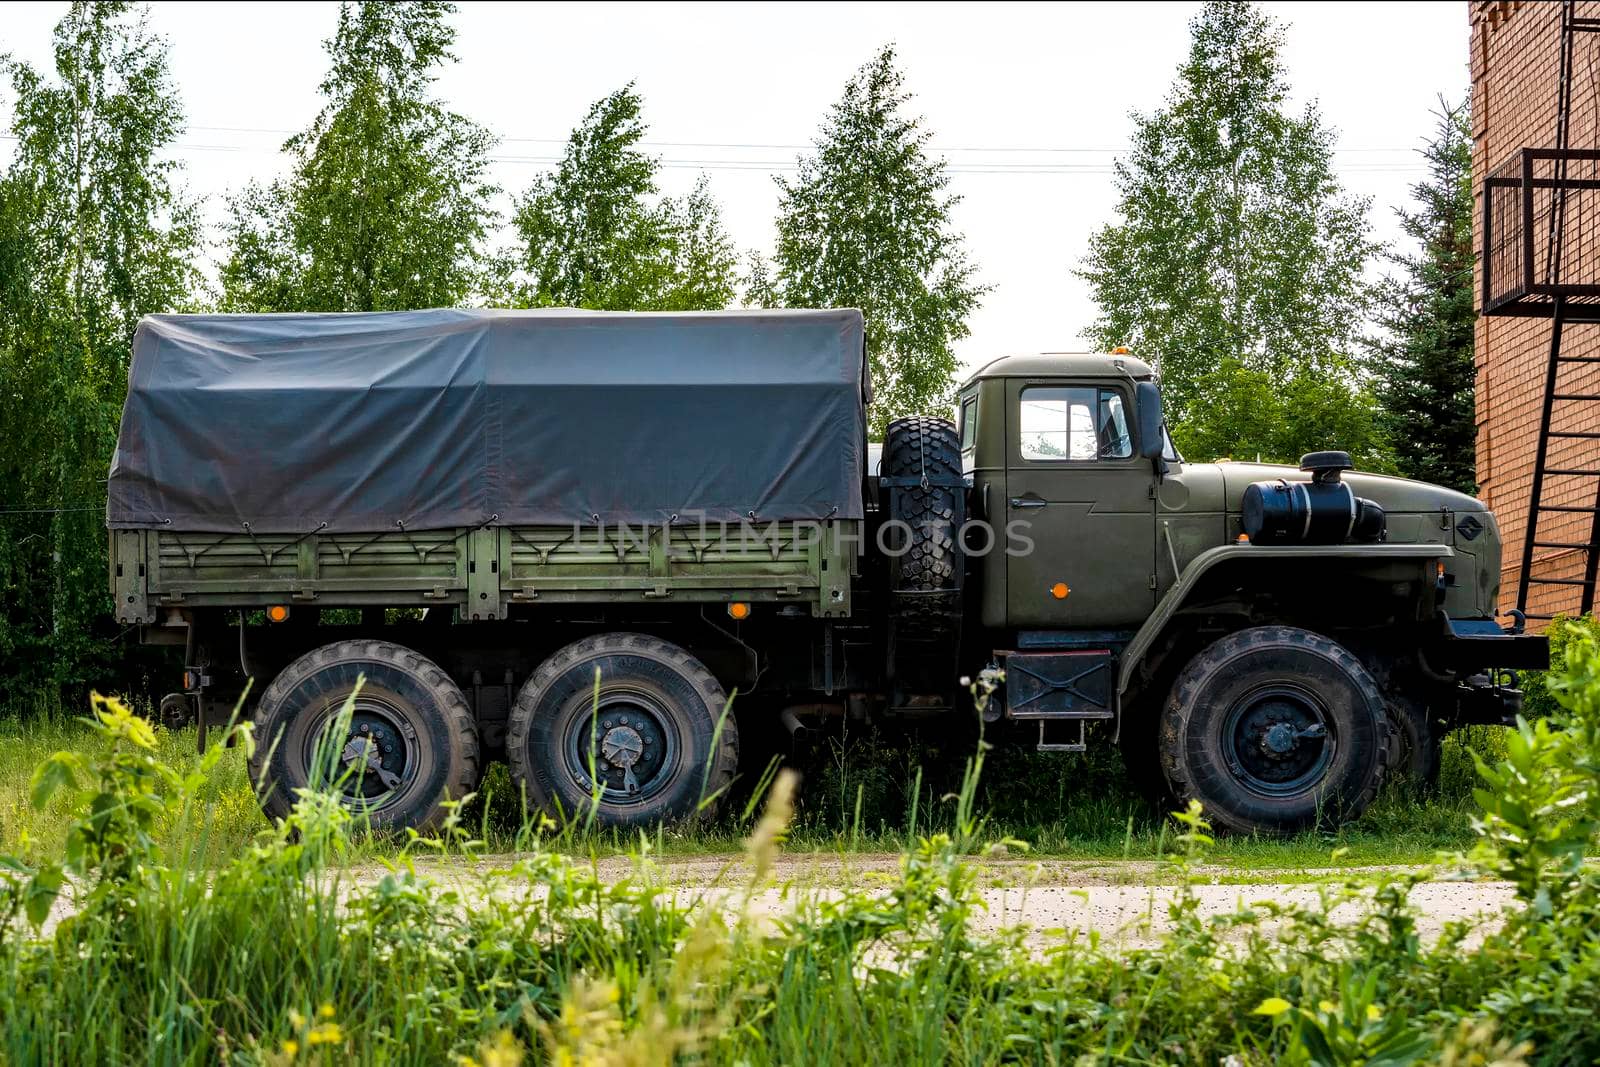 URAL military vehicle all-terrain vehicle. Bashkortostan, Russia - 12 June, 2021. by Essffes